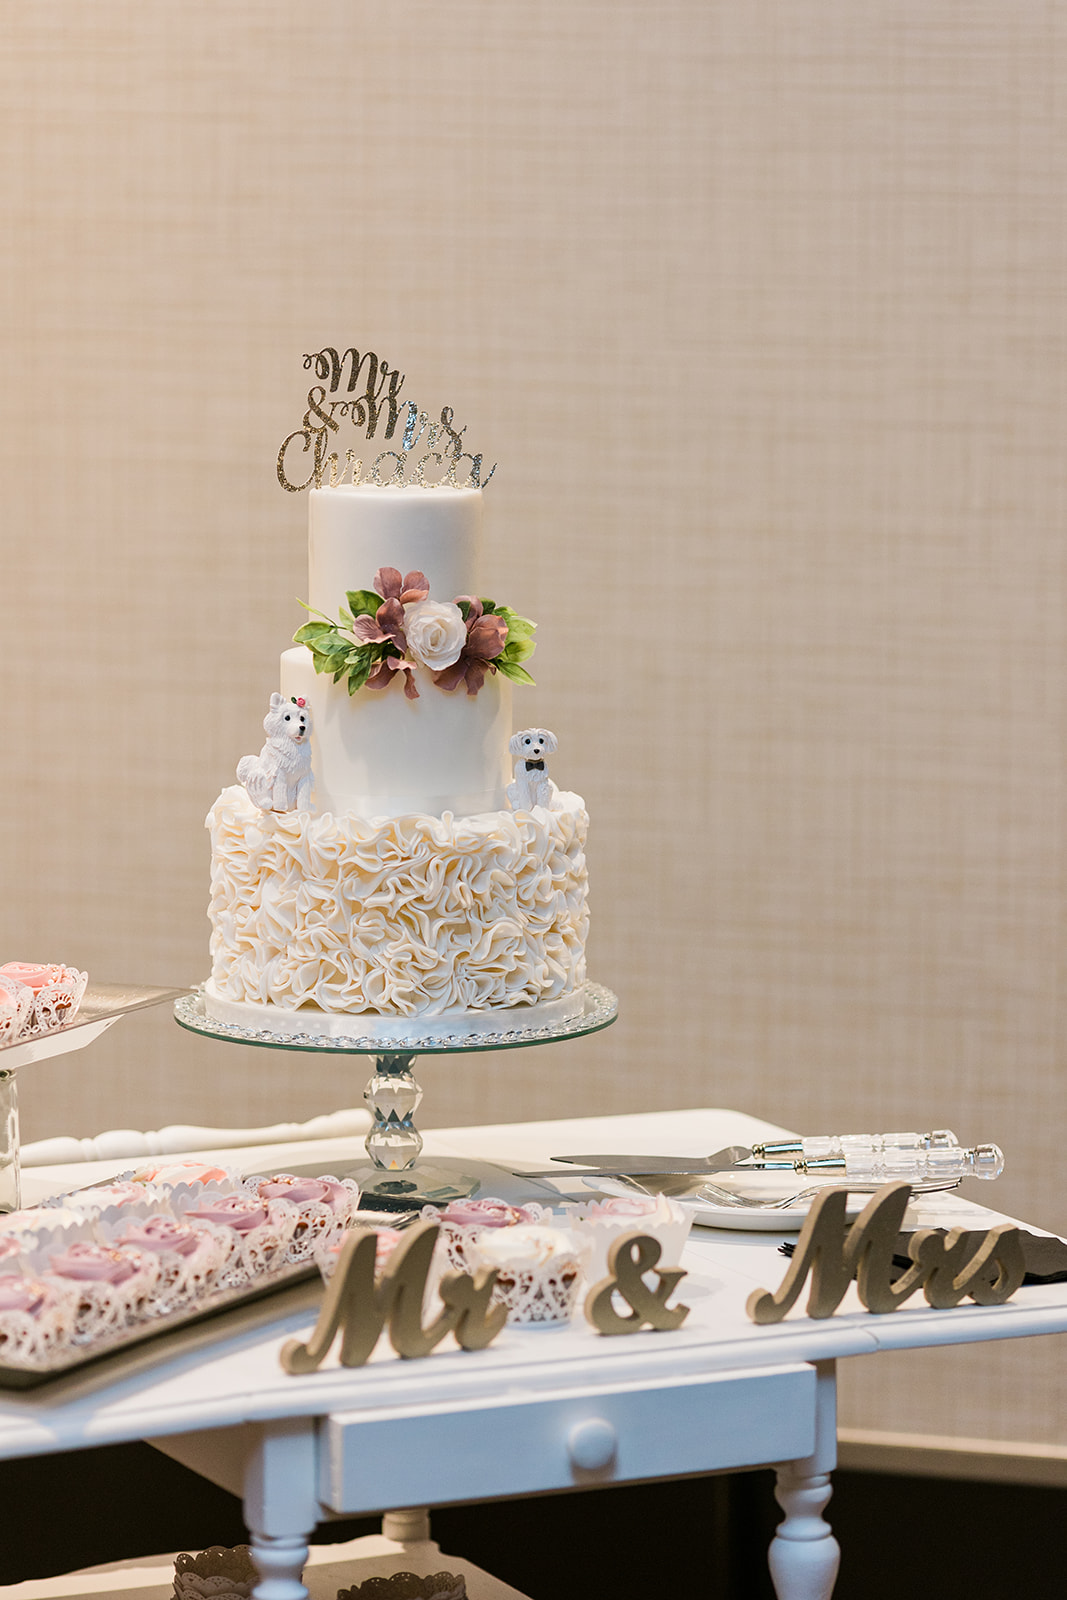 wedding cake at reception